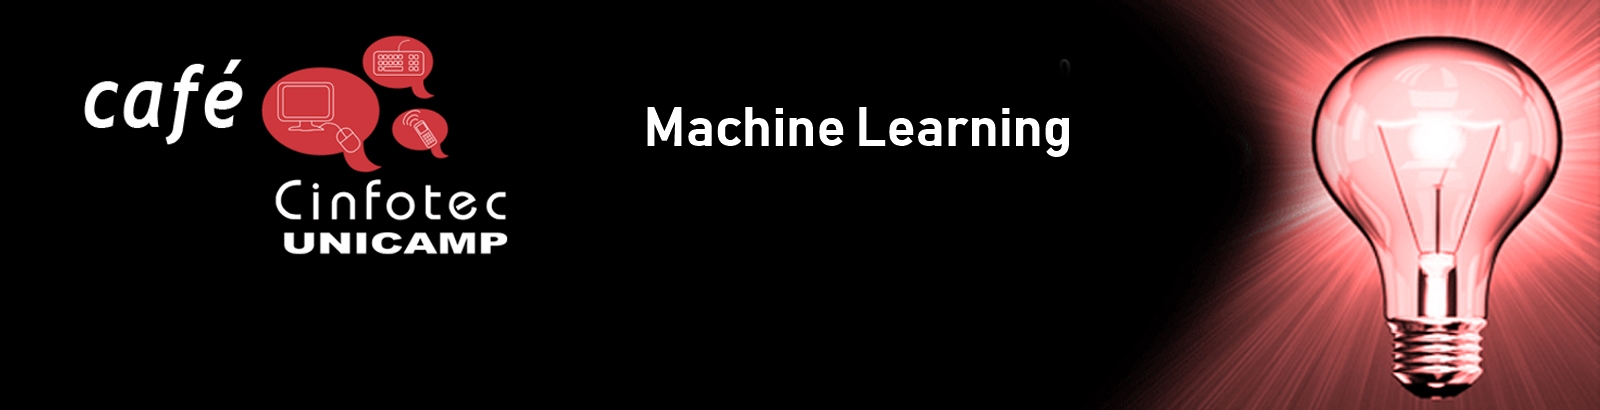 Café Cinfotec Machine Learning